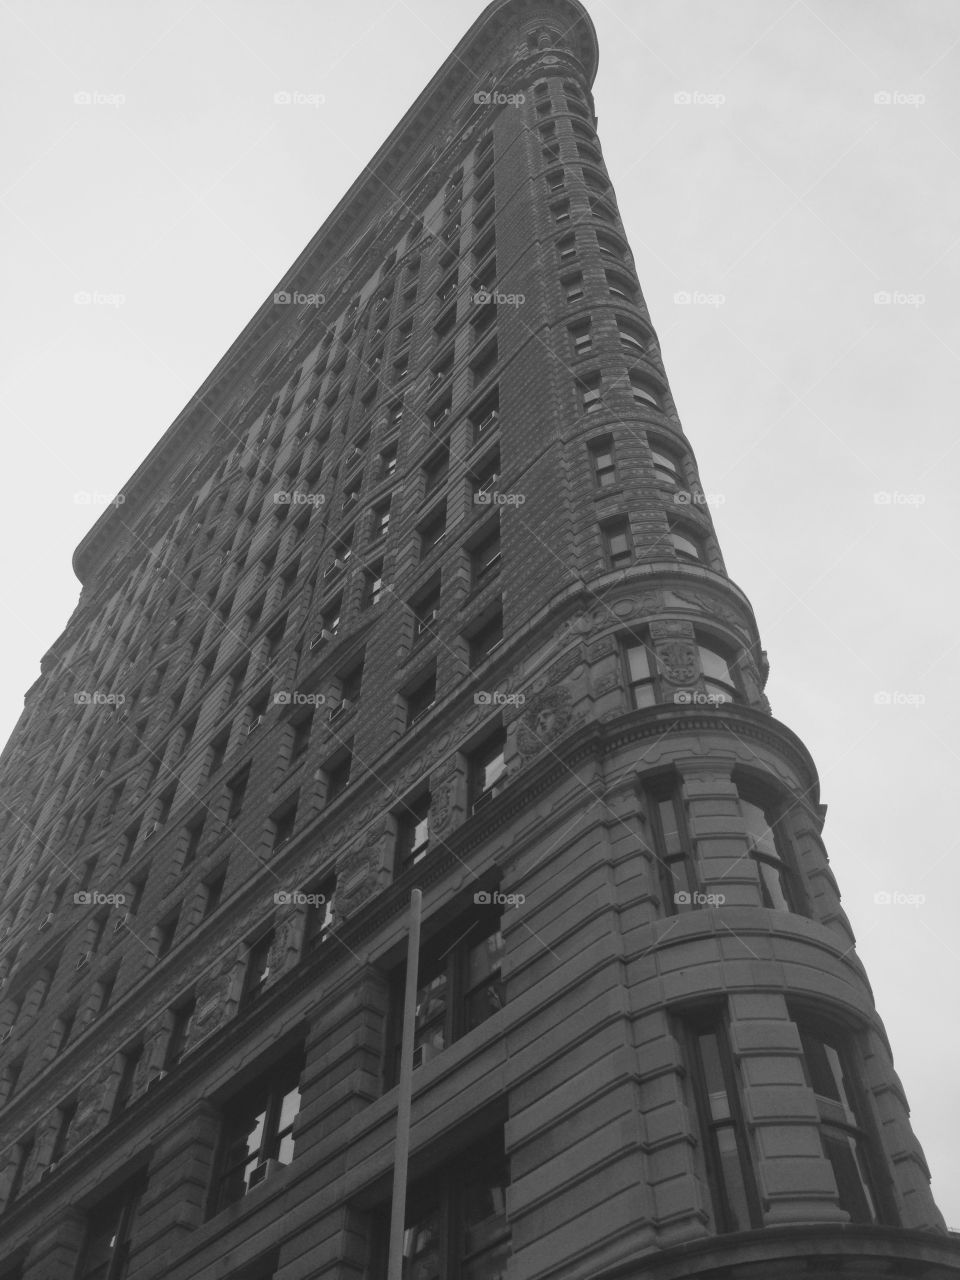 Flatiron building, NYC 